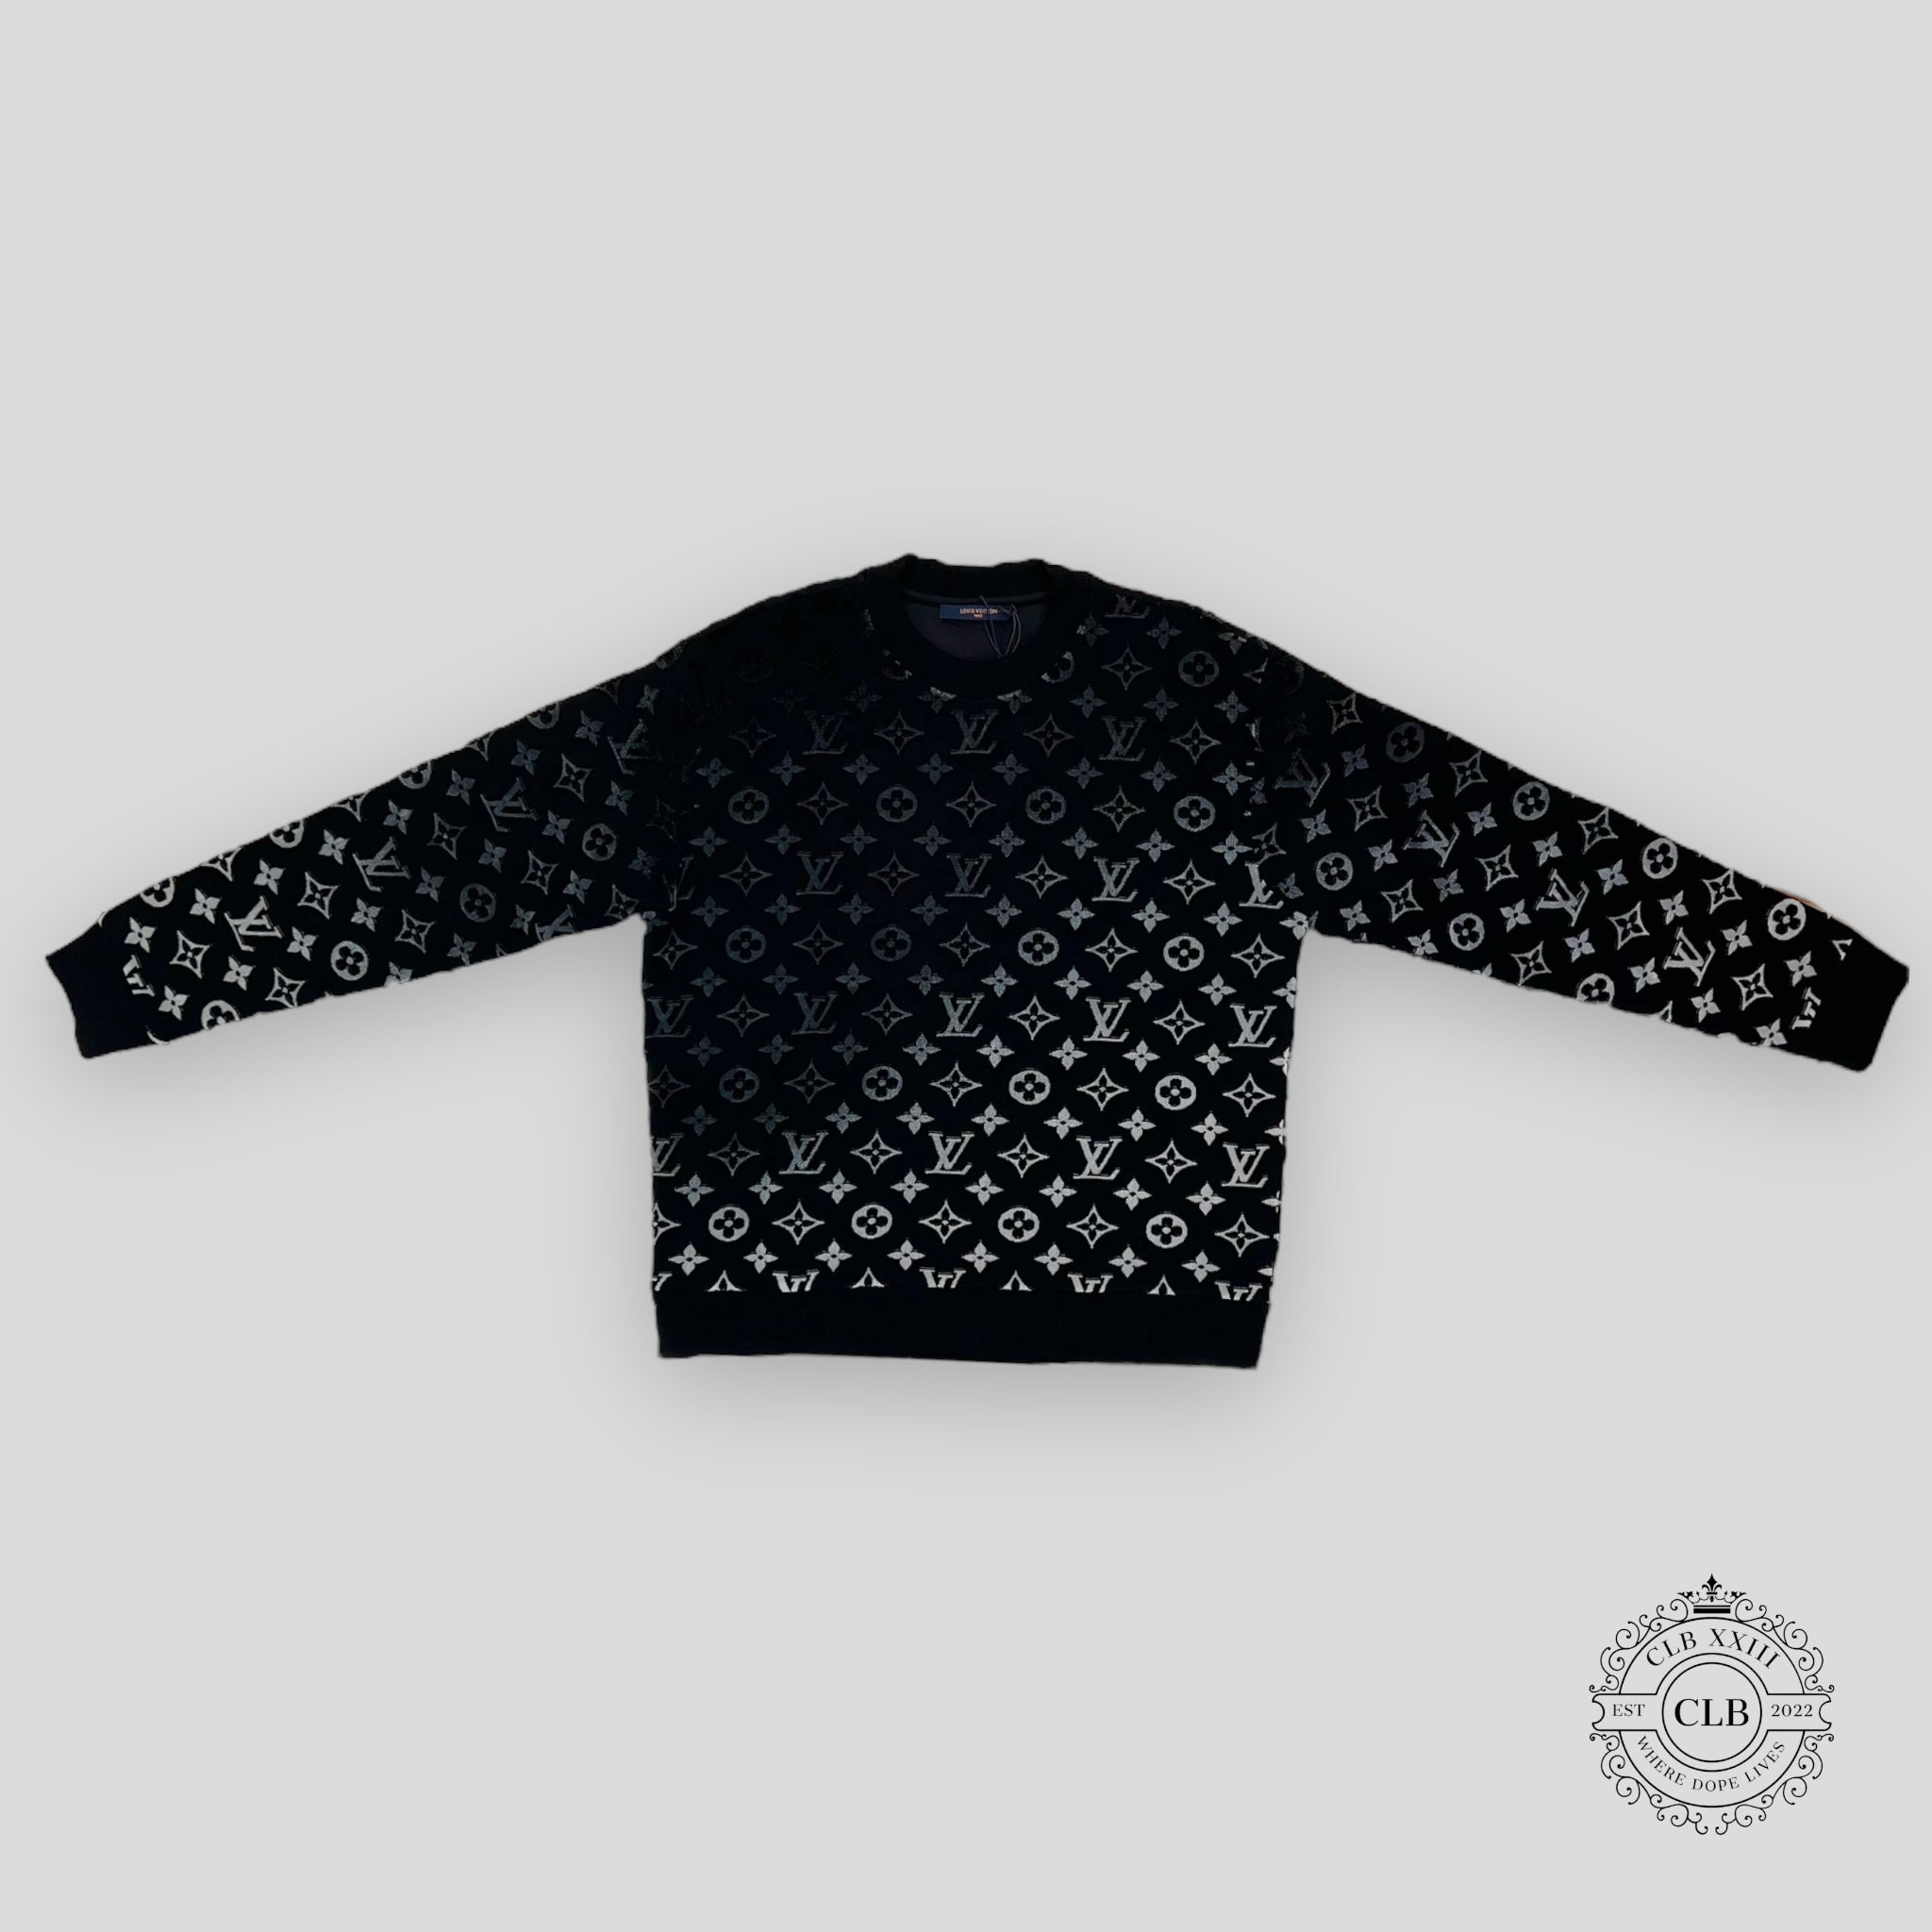 Louis Vuitton monogram sweater  Monogram sweater, Louis vuitton